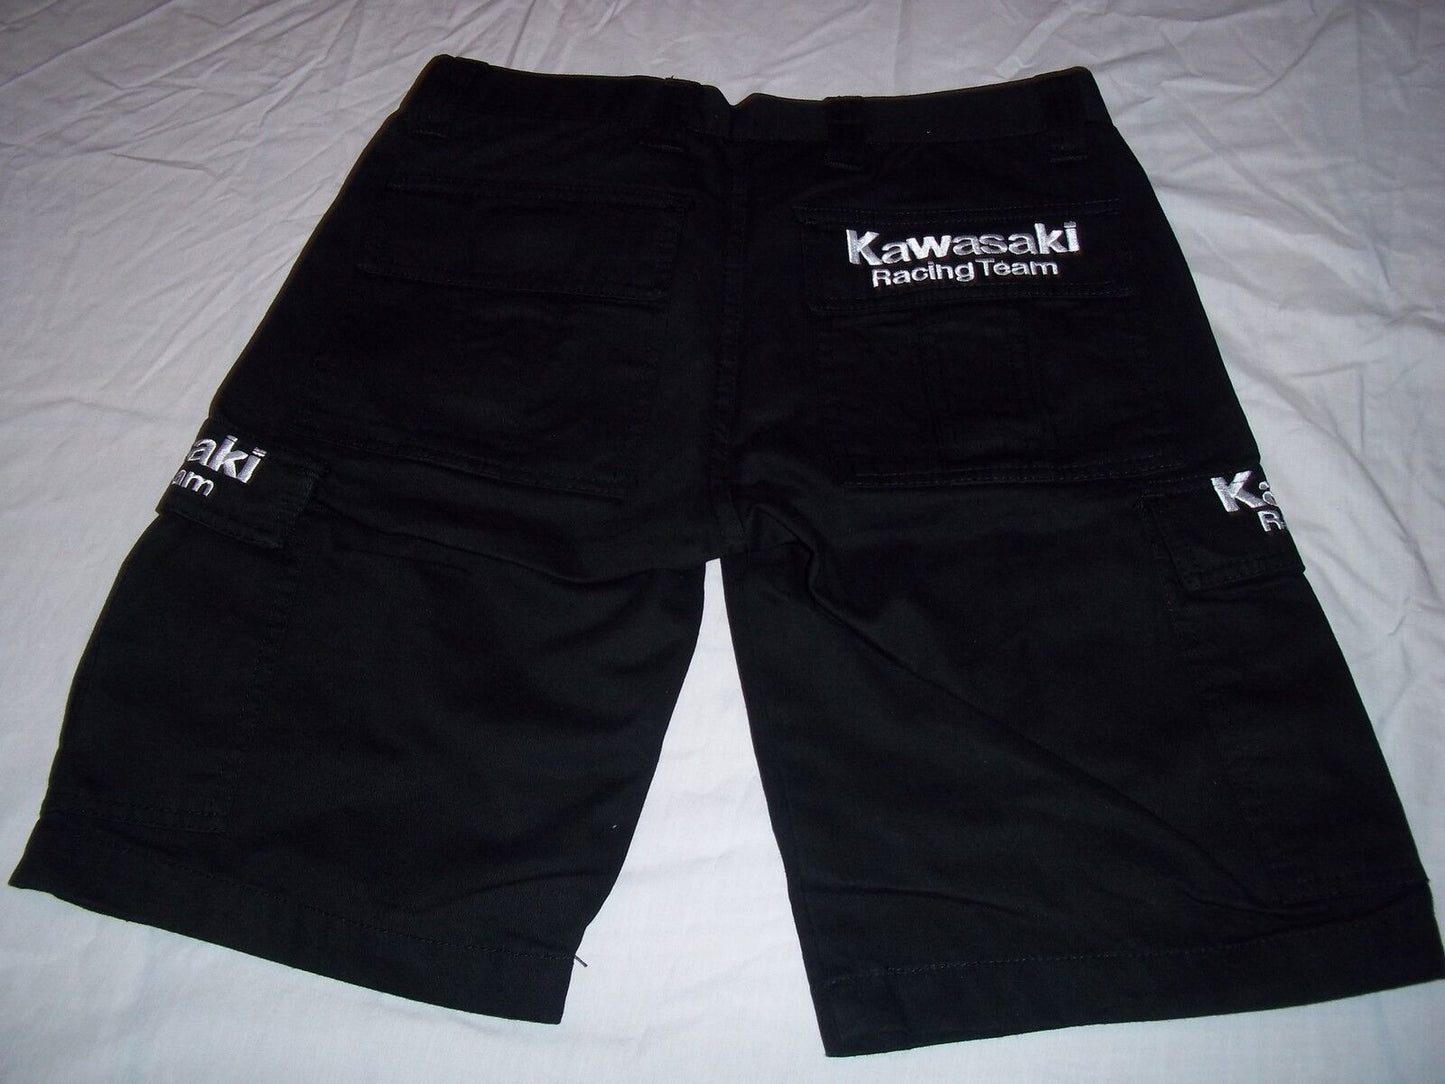 New Official Kawasaki Team Race Wear Ladies Black Shorts